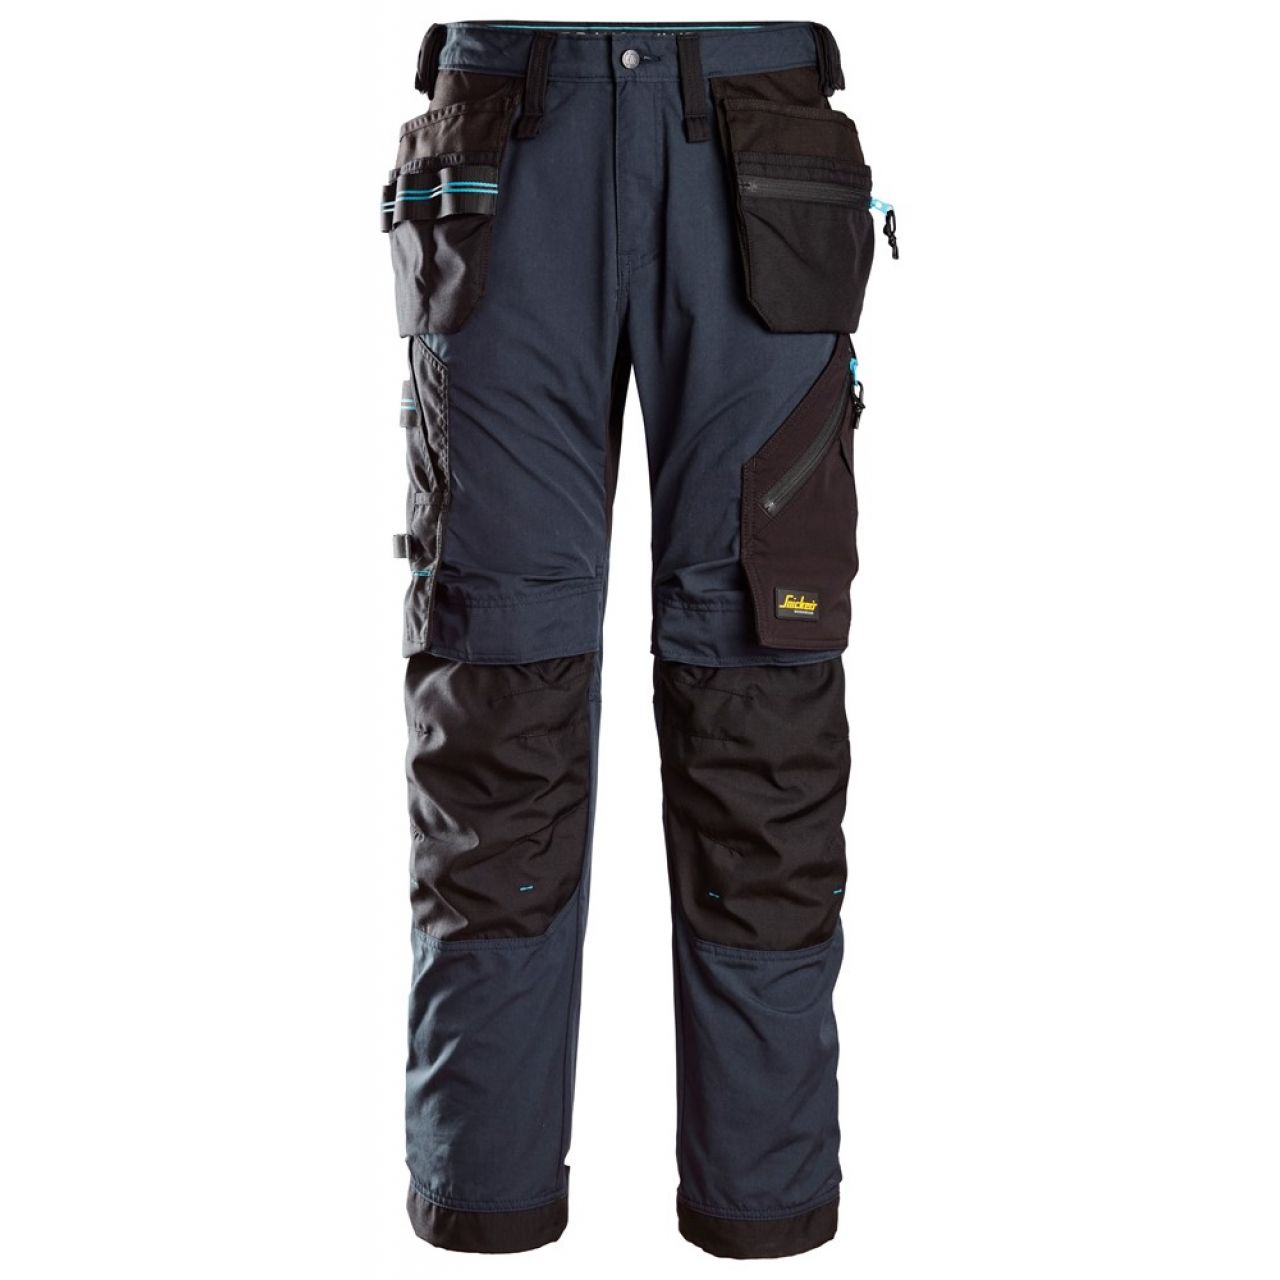 6210 Pantalones largos de trabajo con bolsillos flotantes LiteWork 37.5® azul marino-negro talla 44